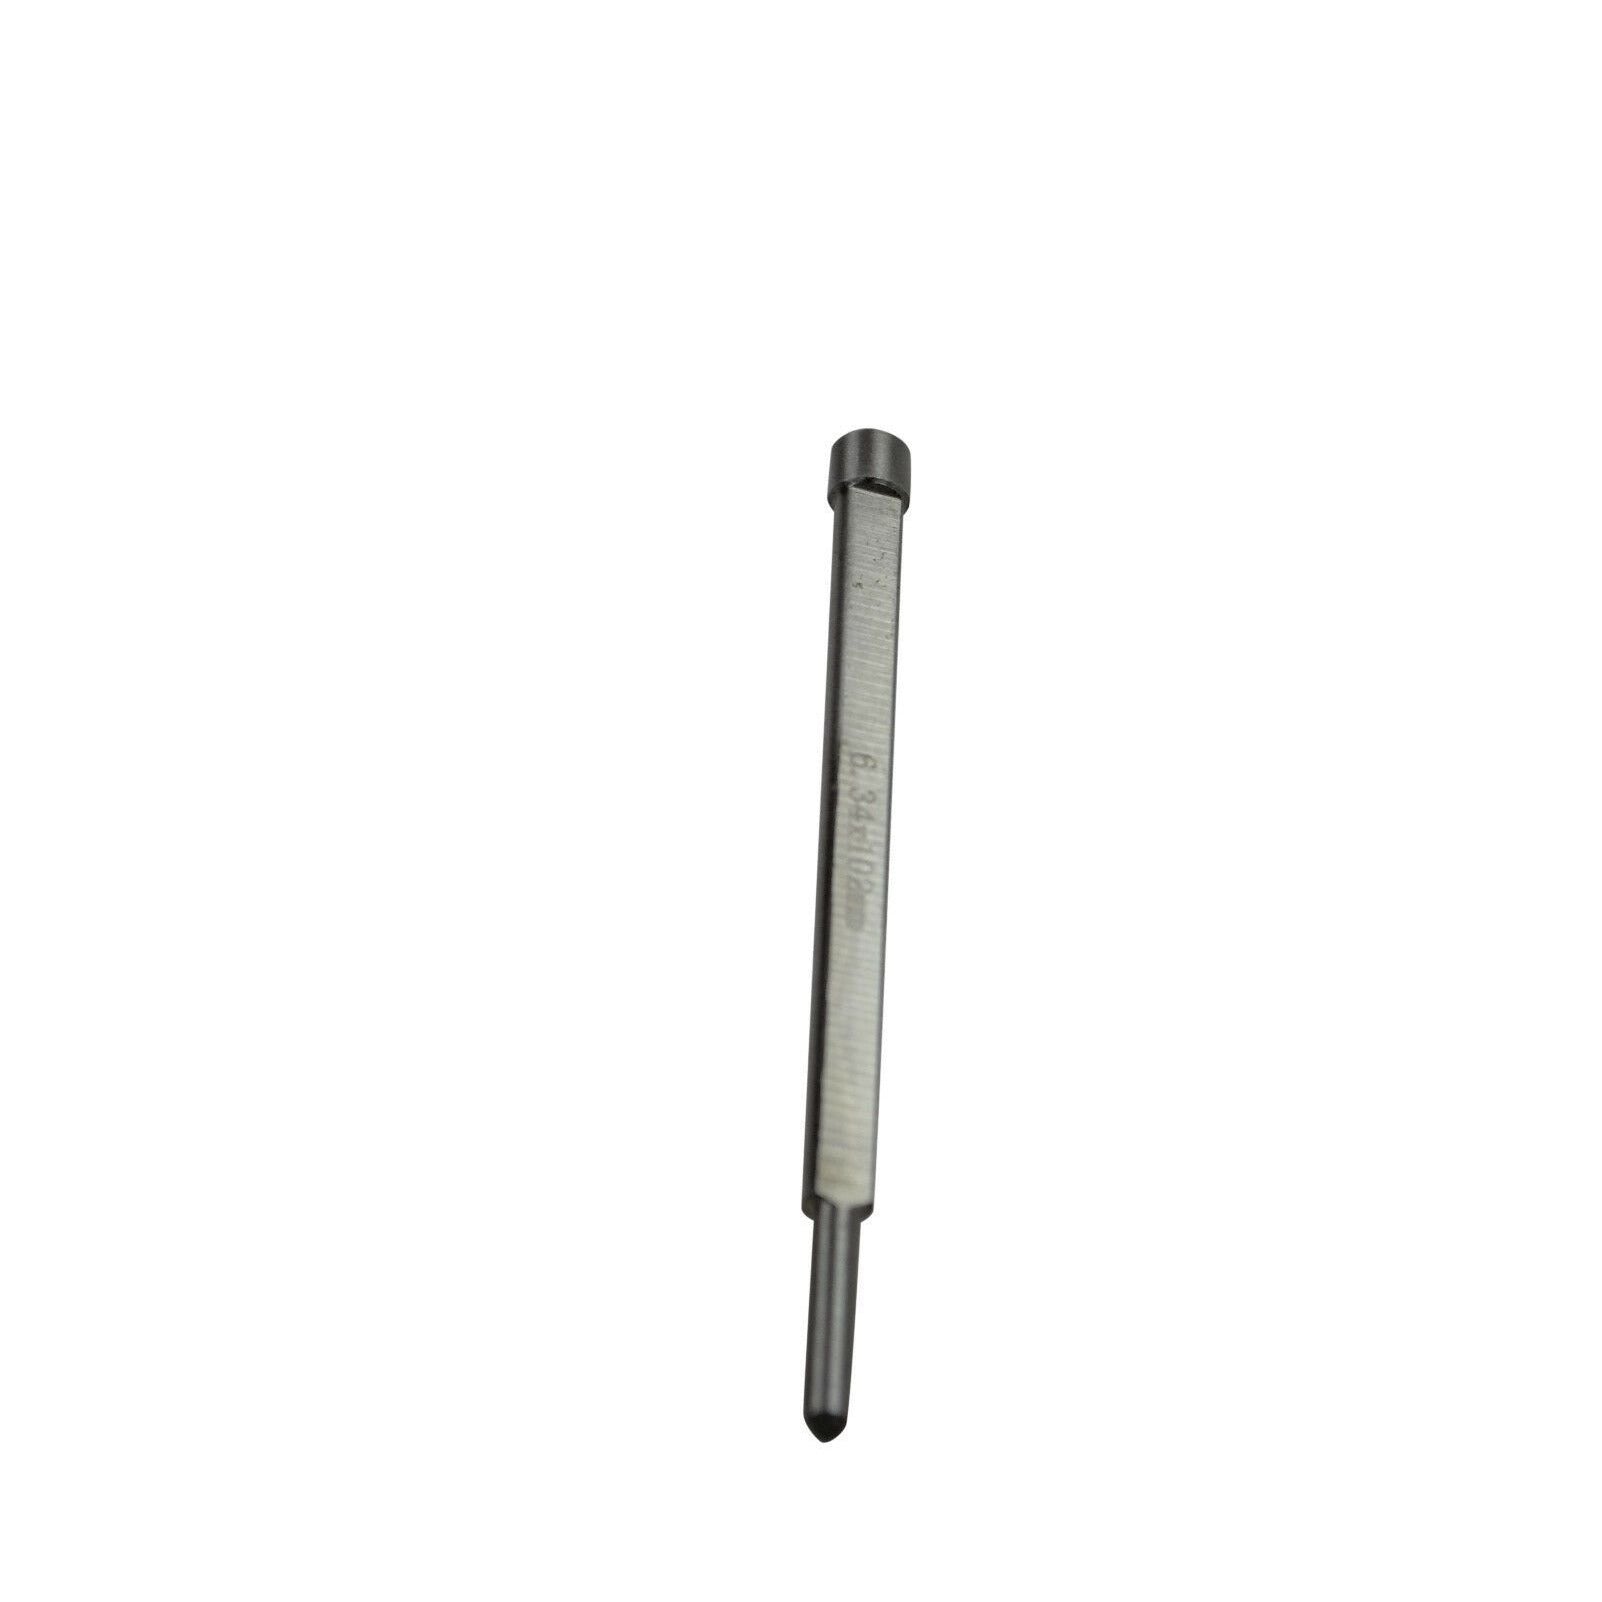 annular cutter kit incules sizes 20,22,24,26x50mm HSS CNC annular broach cut universal shank industrial metalwork supplies